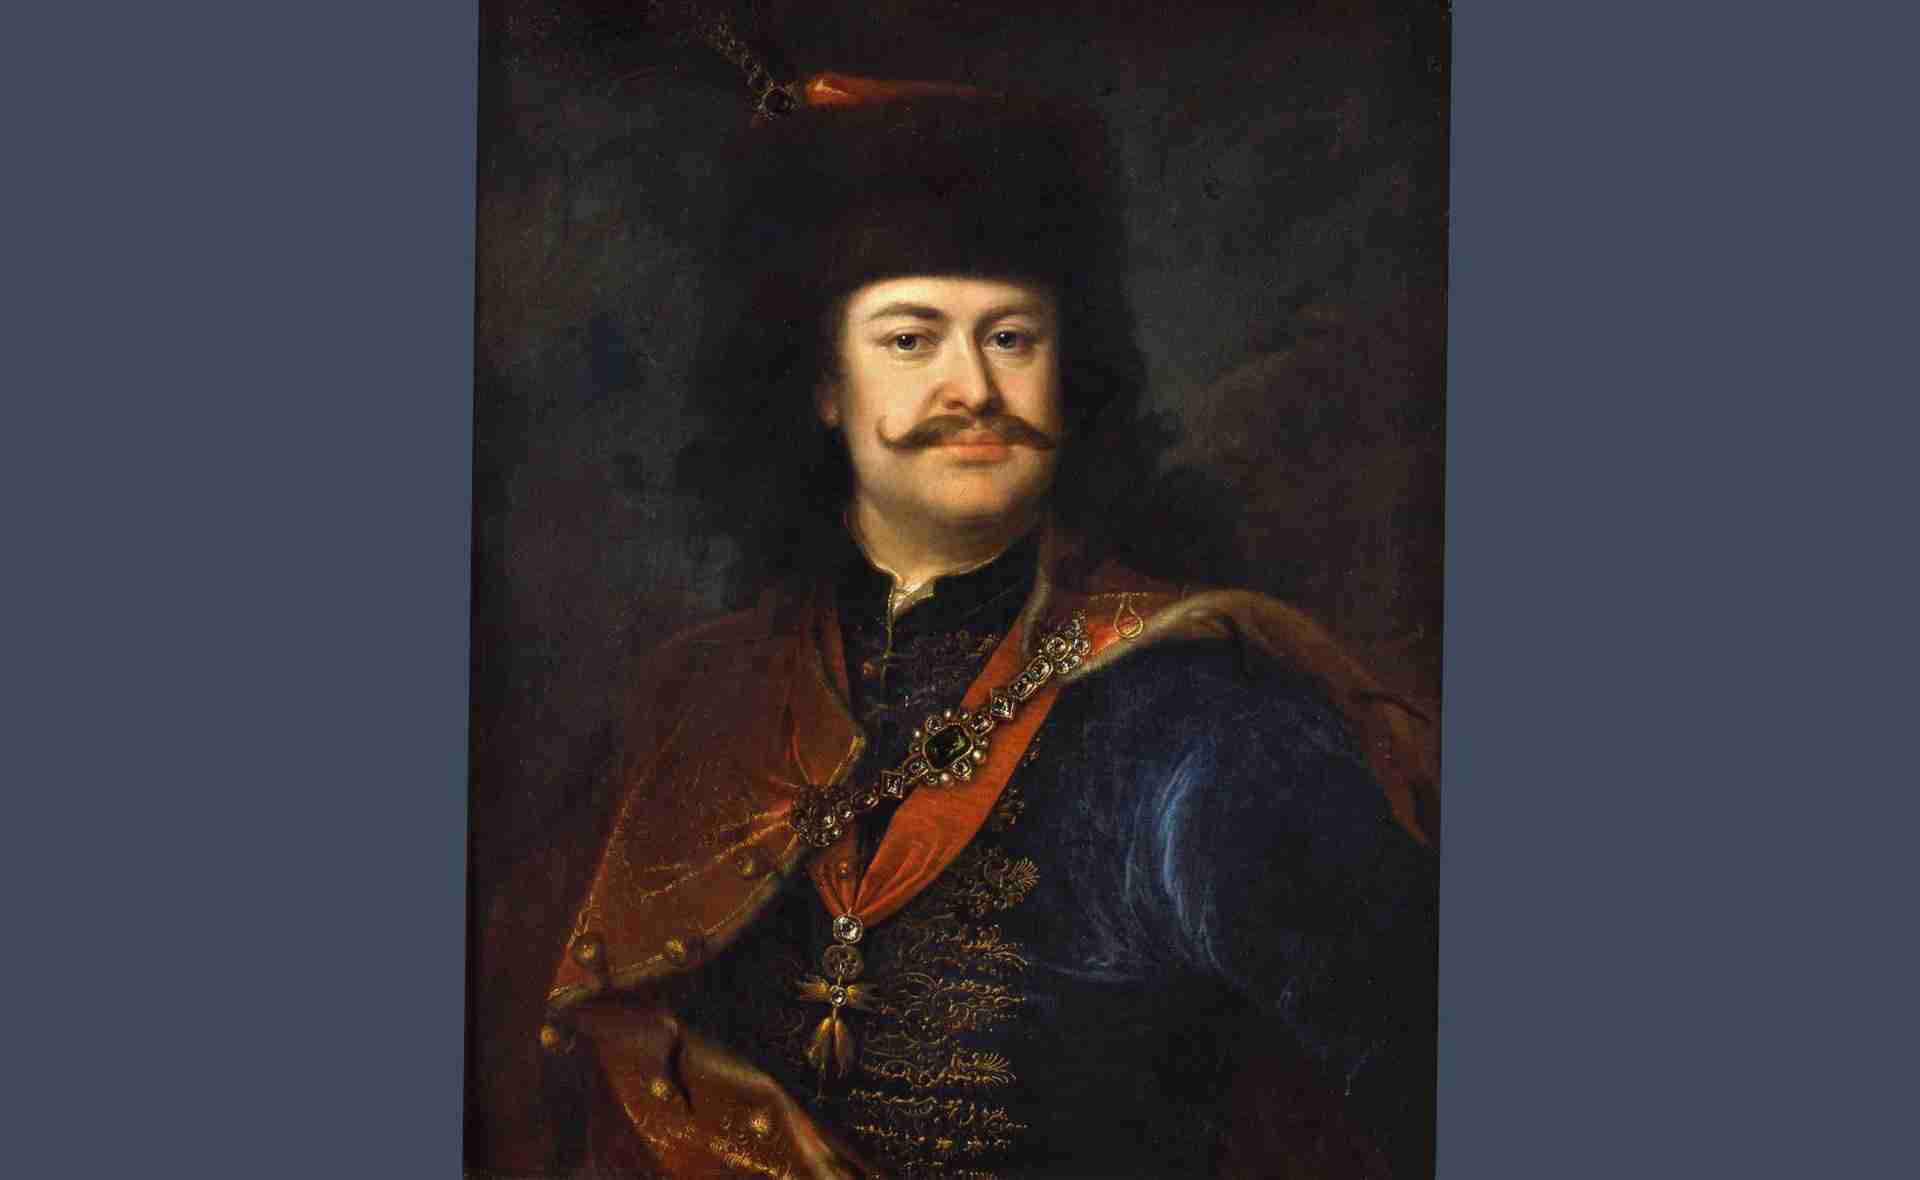 Portrait réalisé par Ádám Mányoki en 1712 à Gdańsk